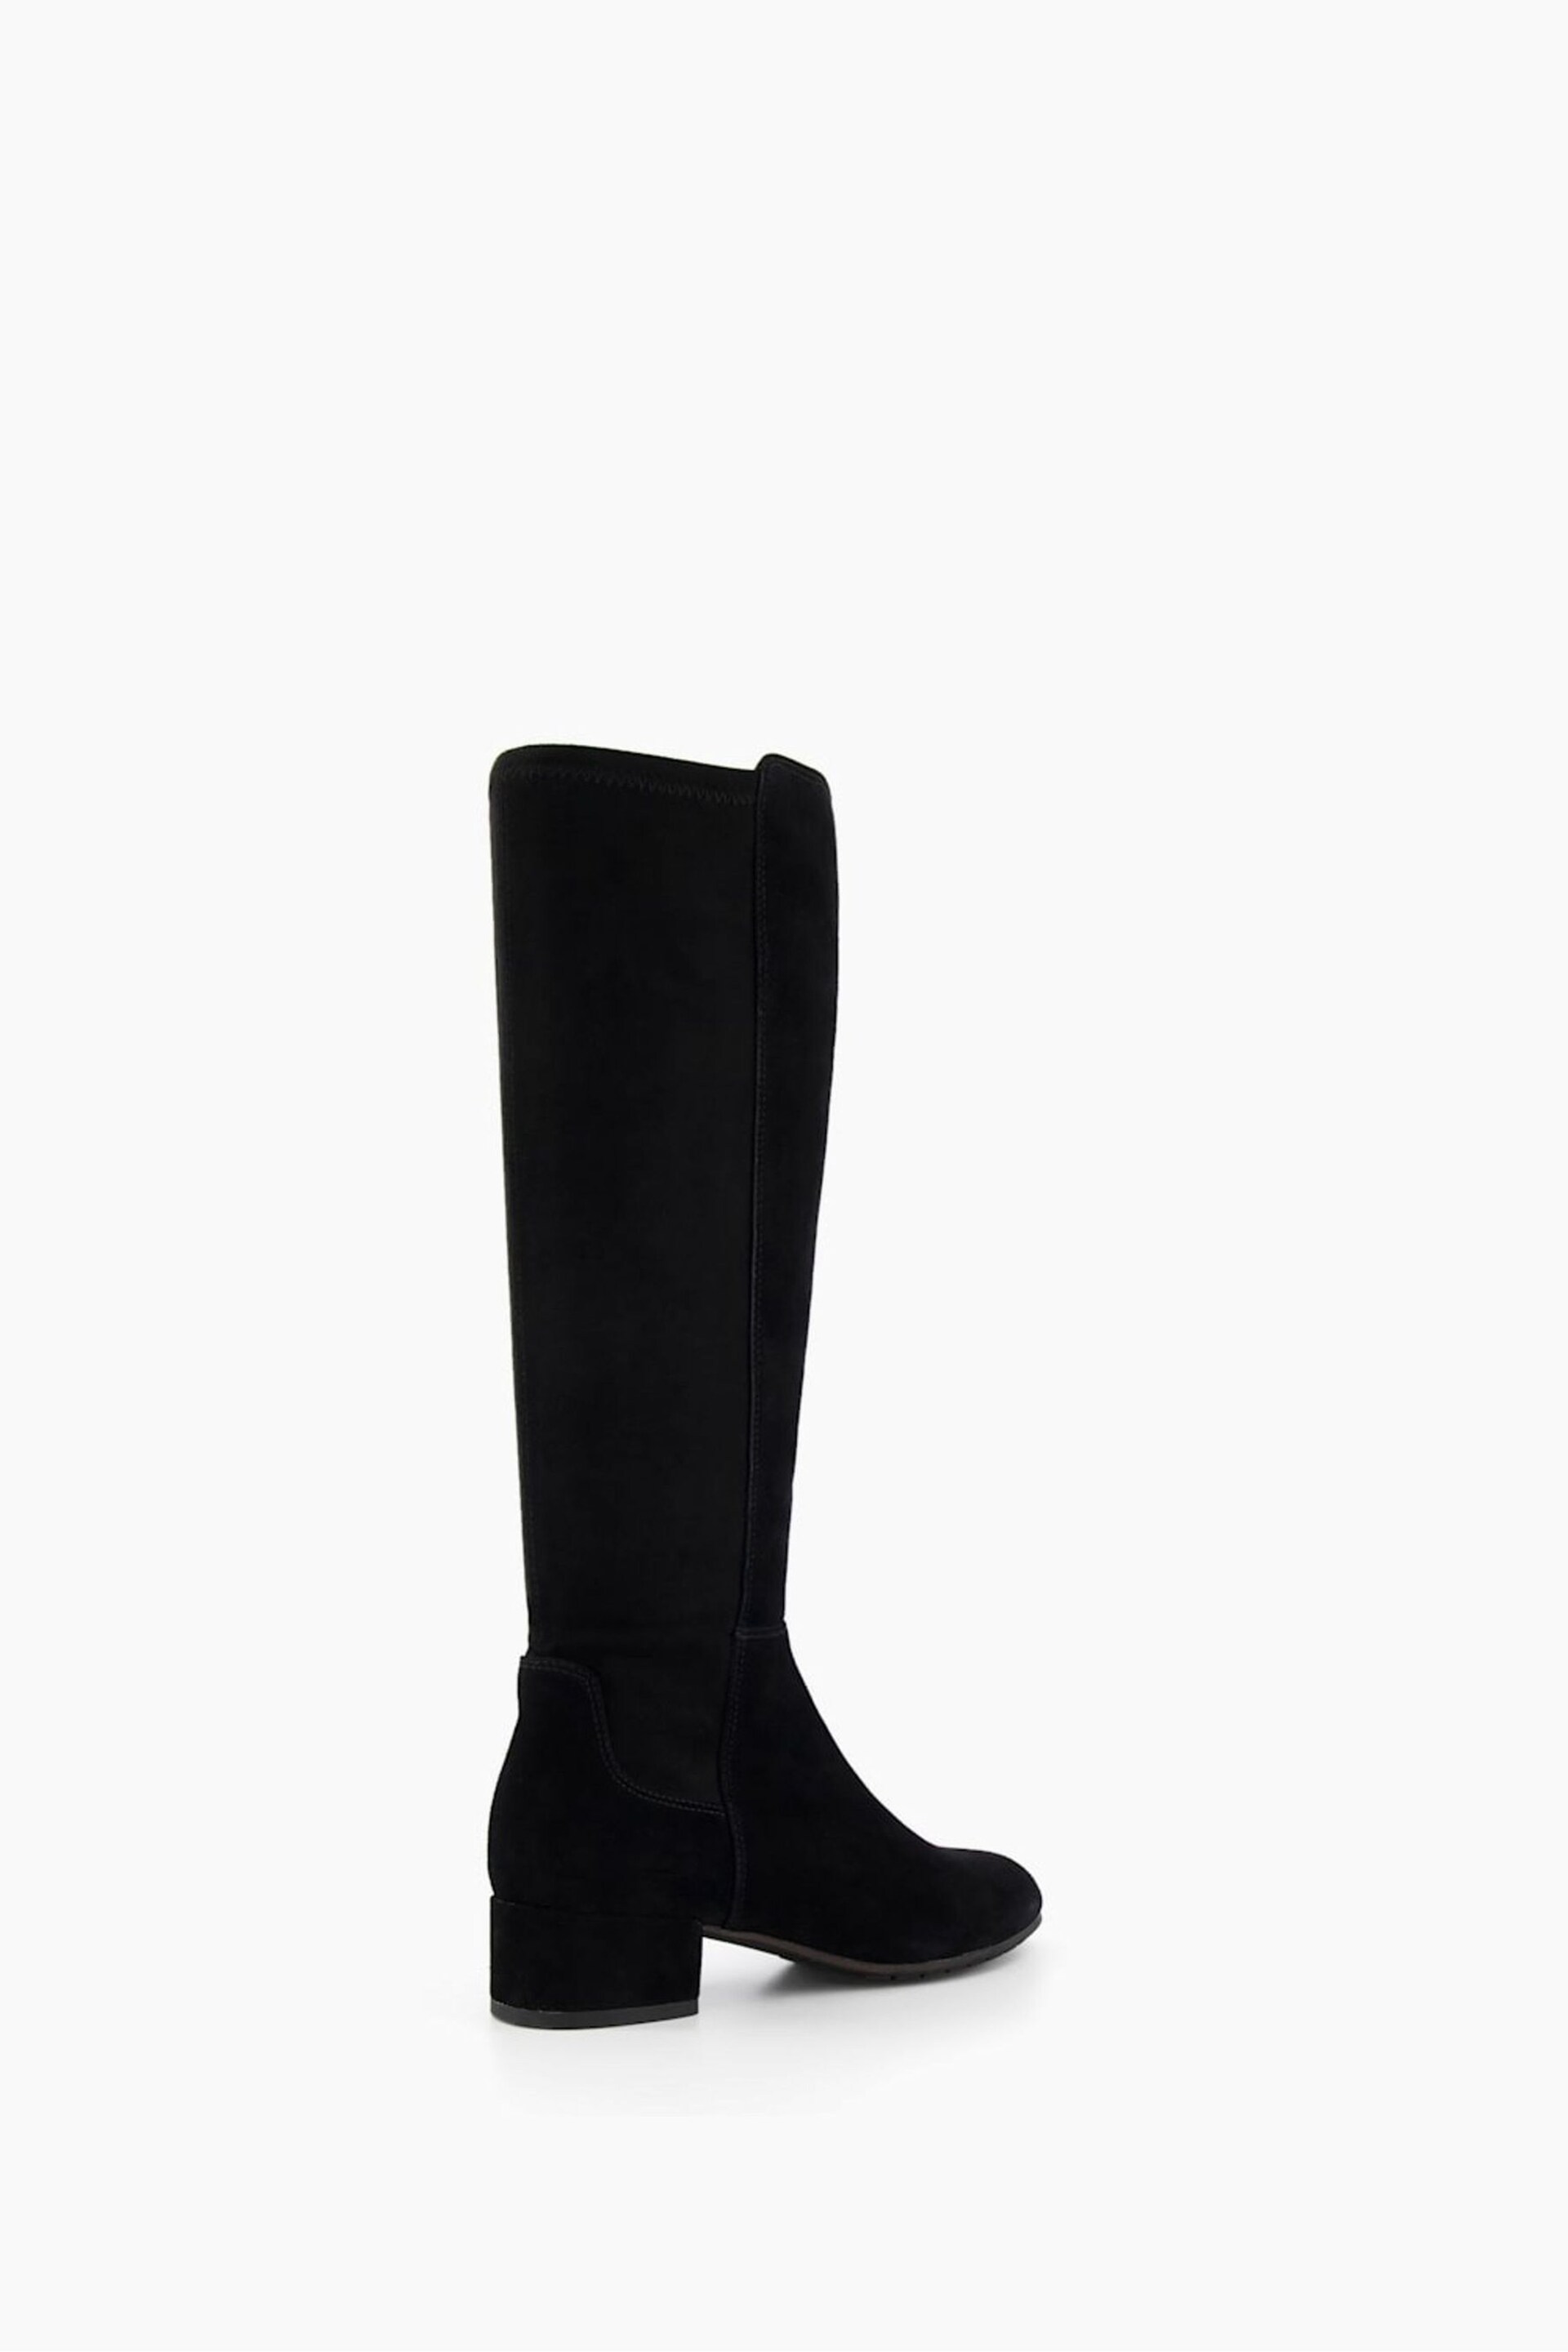 Dune London Black Tayla Smart Stretch High Leg Boots - Image 4 of 6